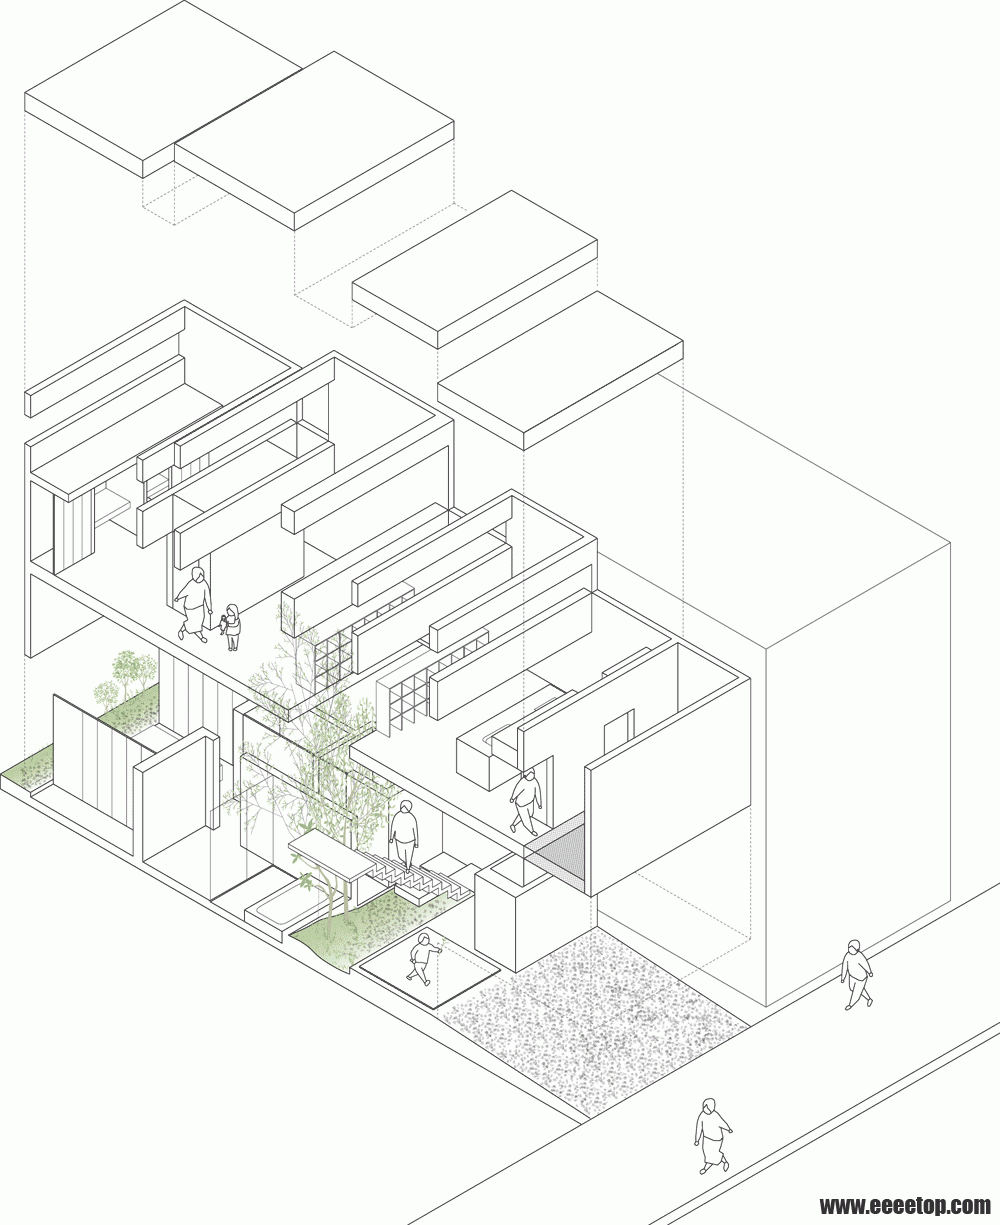 dezeen_Machi-House-by-UID-Architects_Cut-through axonometric.gif